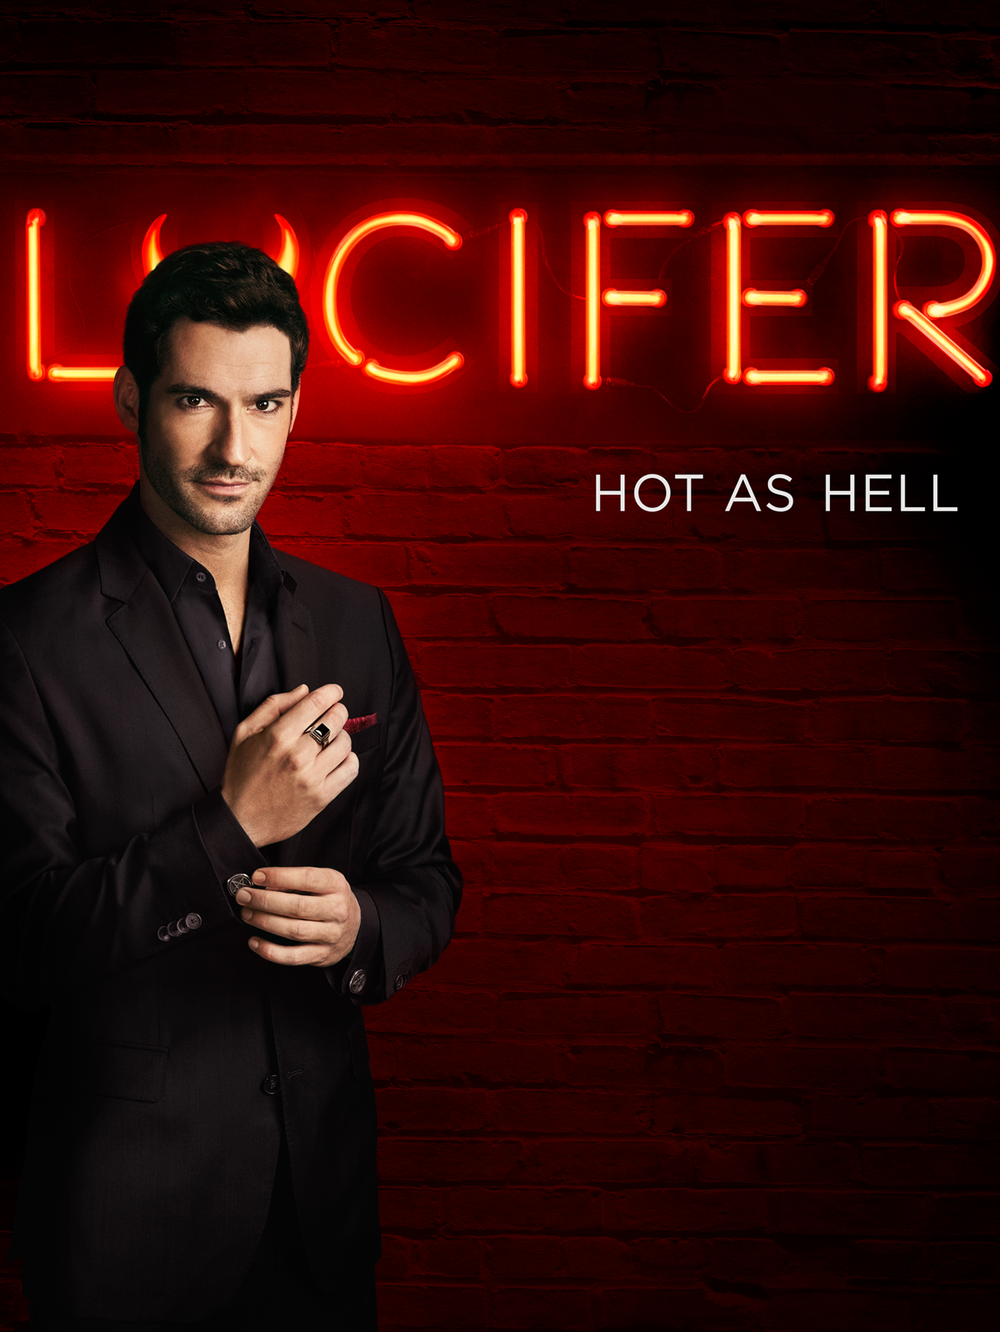 Lucifer Season 1 Ending Story Explanation in Hindi & English